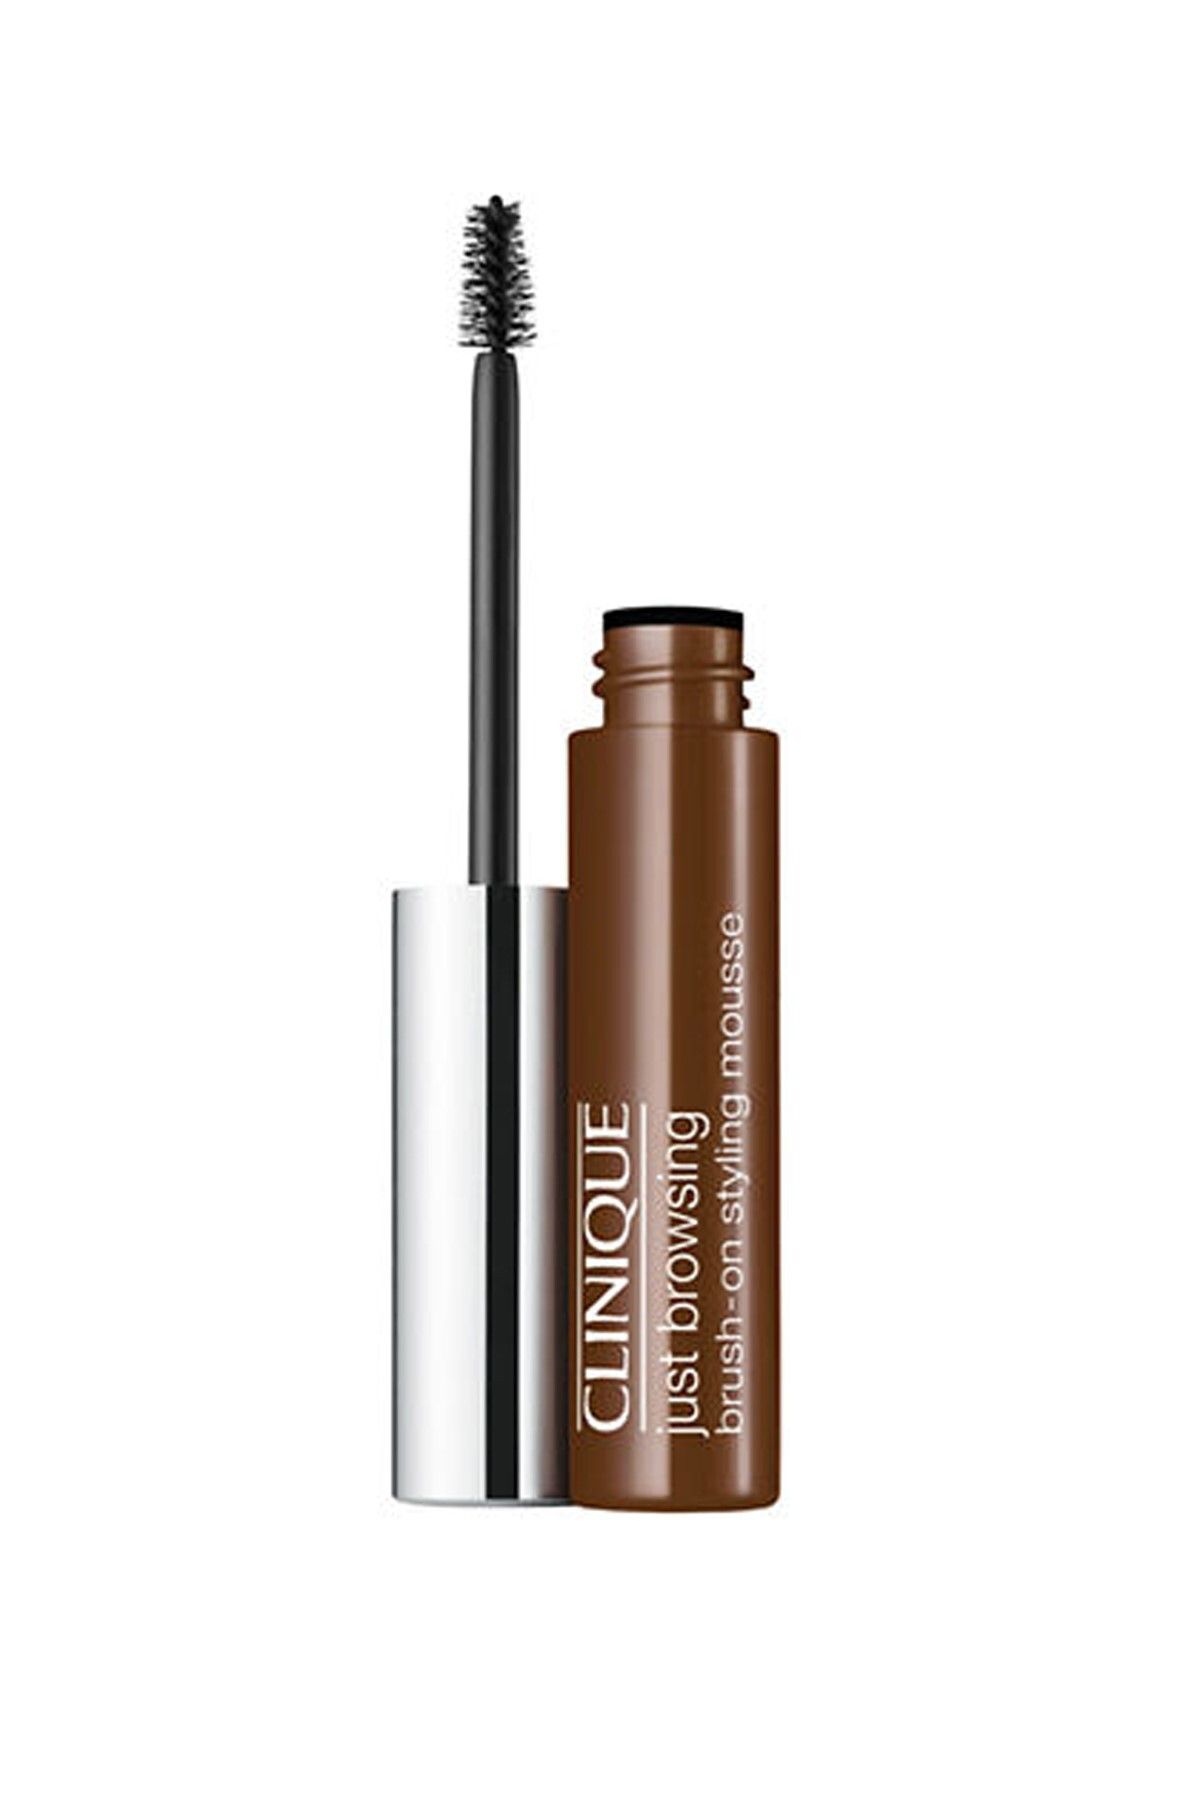 Clinique Dark Brown Super Eyebrow Mascara - Just Browsing Brush On Styling Mousse 03 Deep Brown DKÜrün1131